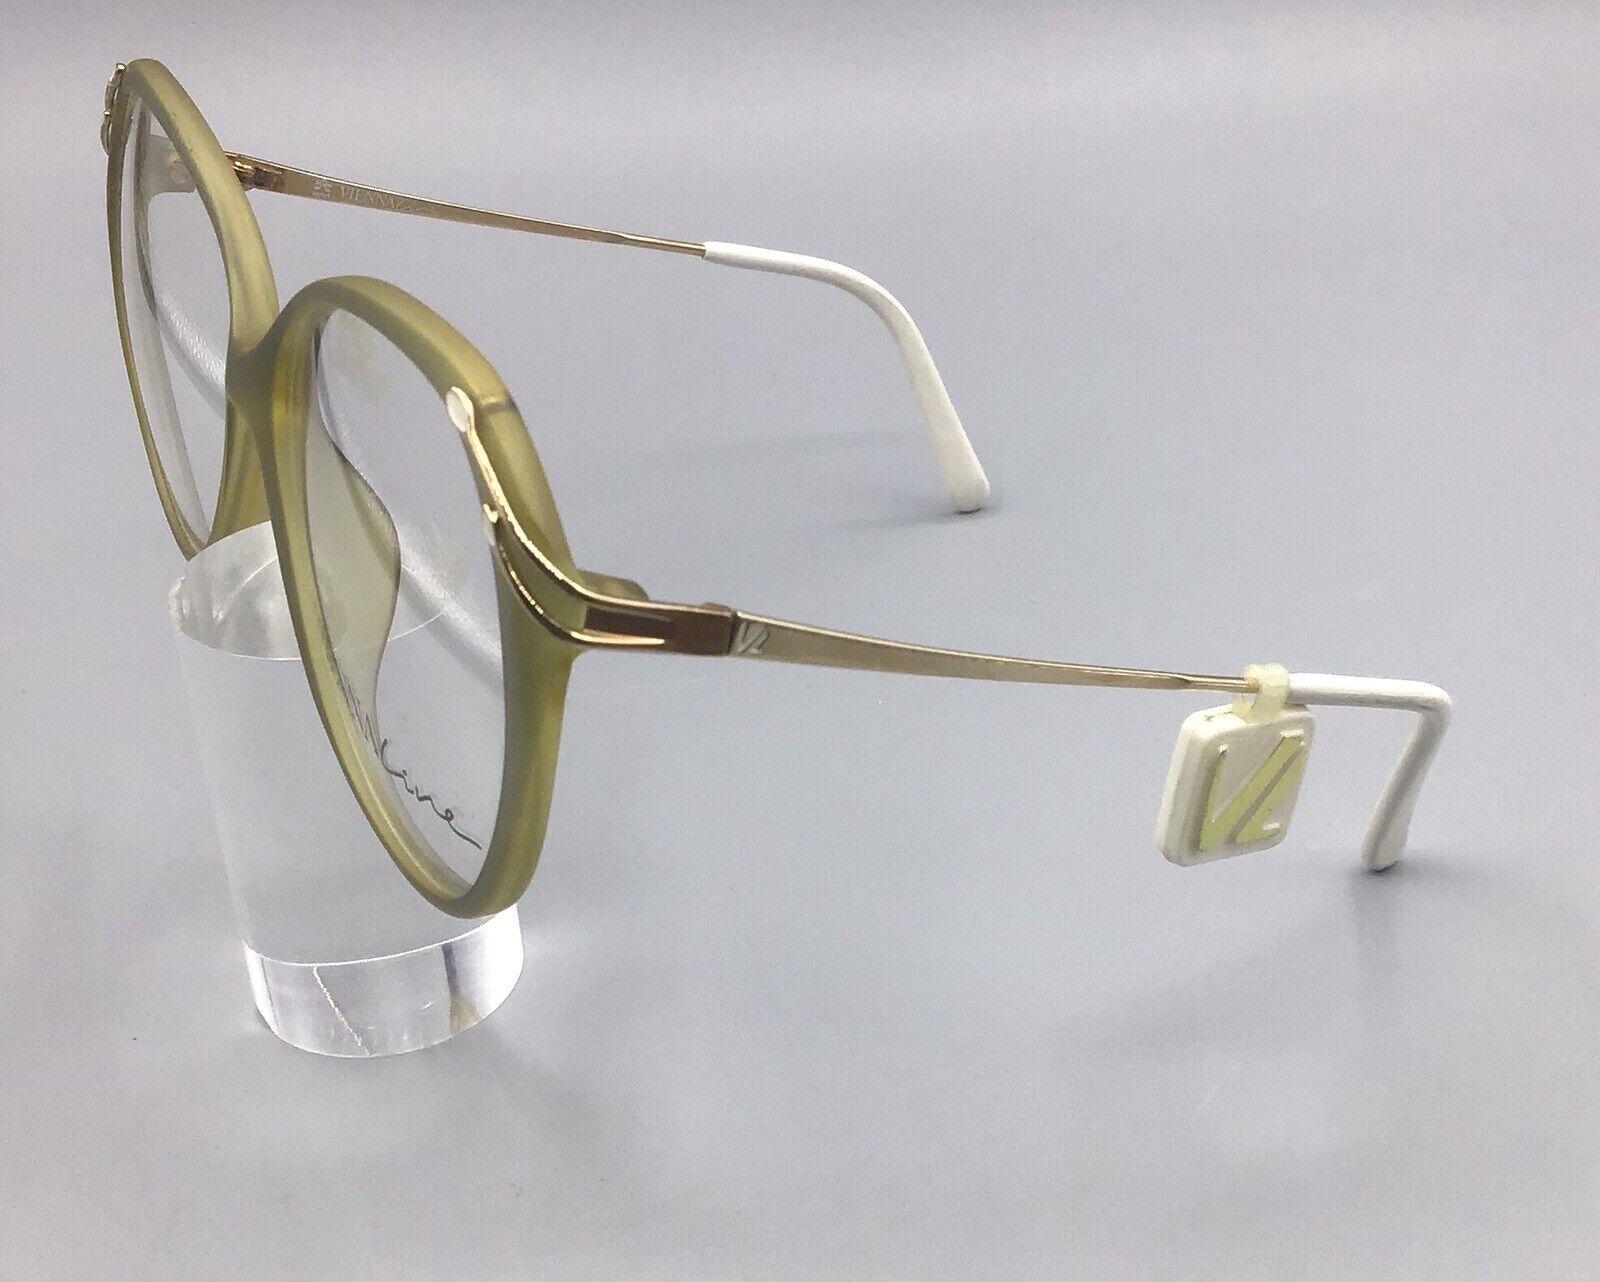 ViennaLine 20 CT gold plated germany 1352 occhiale vintage brillen lunettes